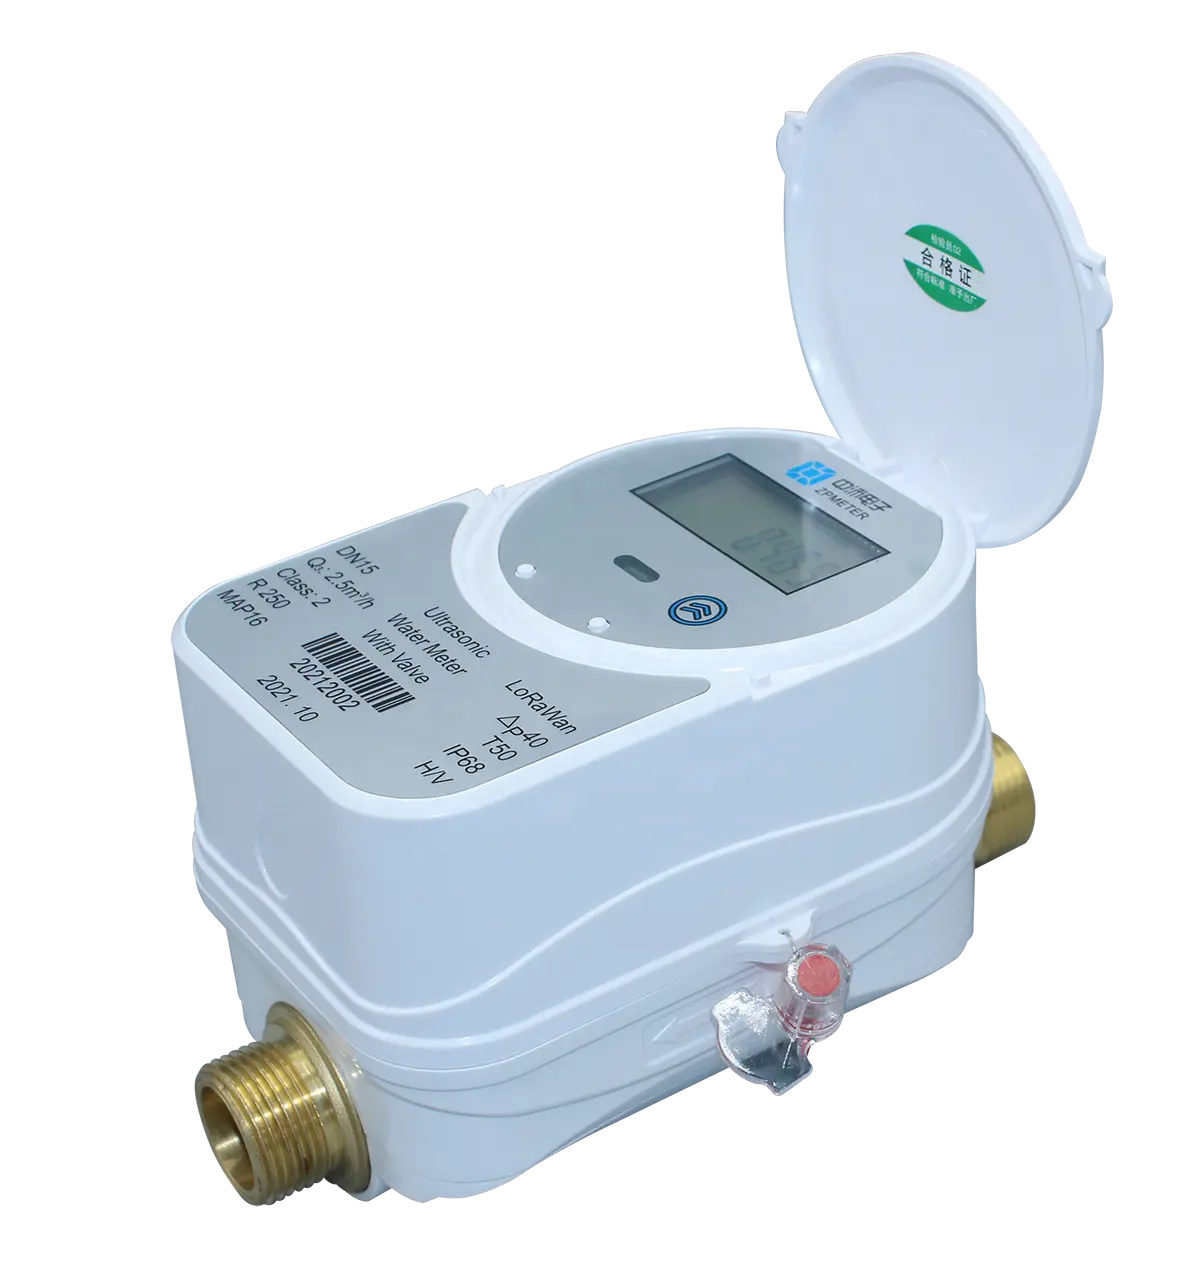 Smart Ultrasonic Water Flow Meter with Tuya Zigbee App Control with Wi-Fi connection